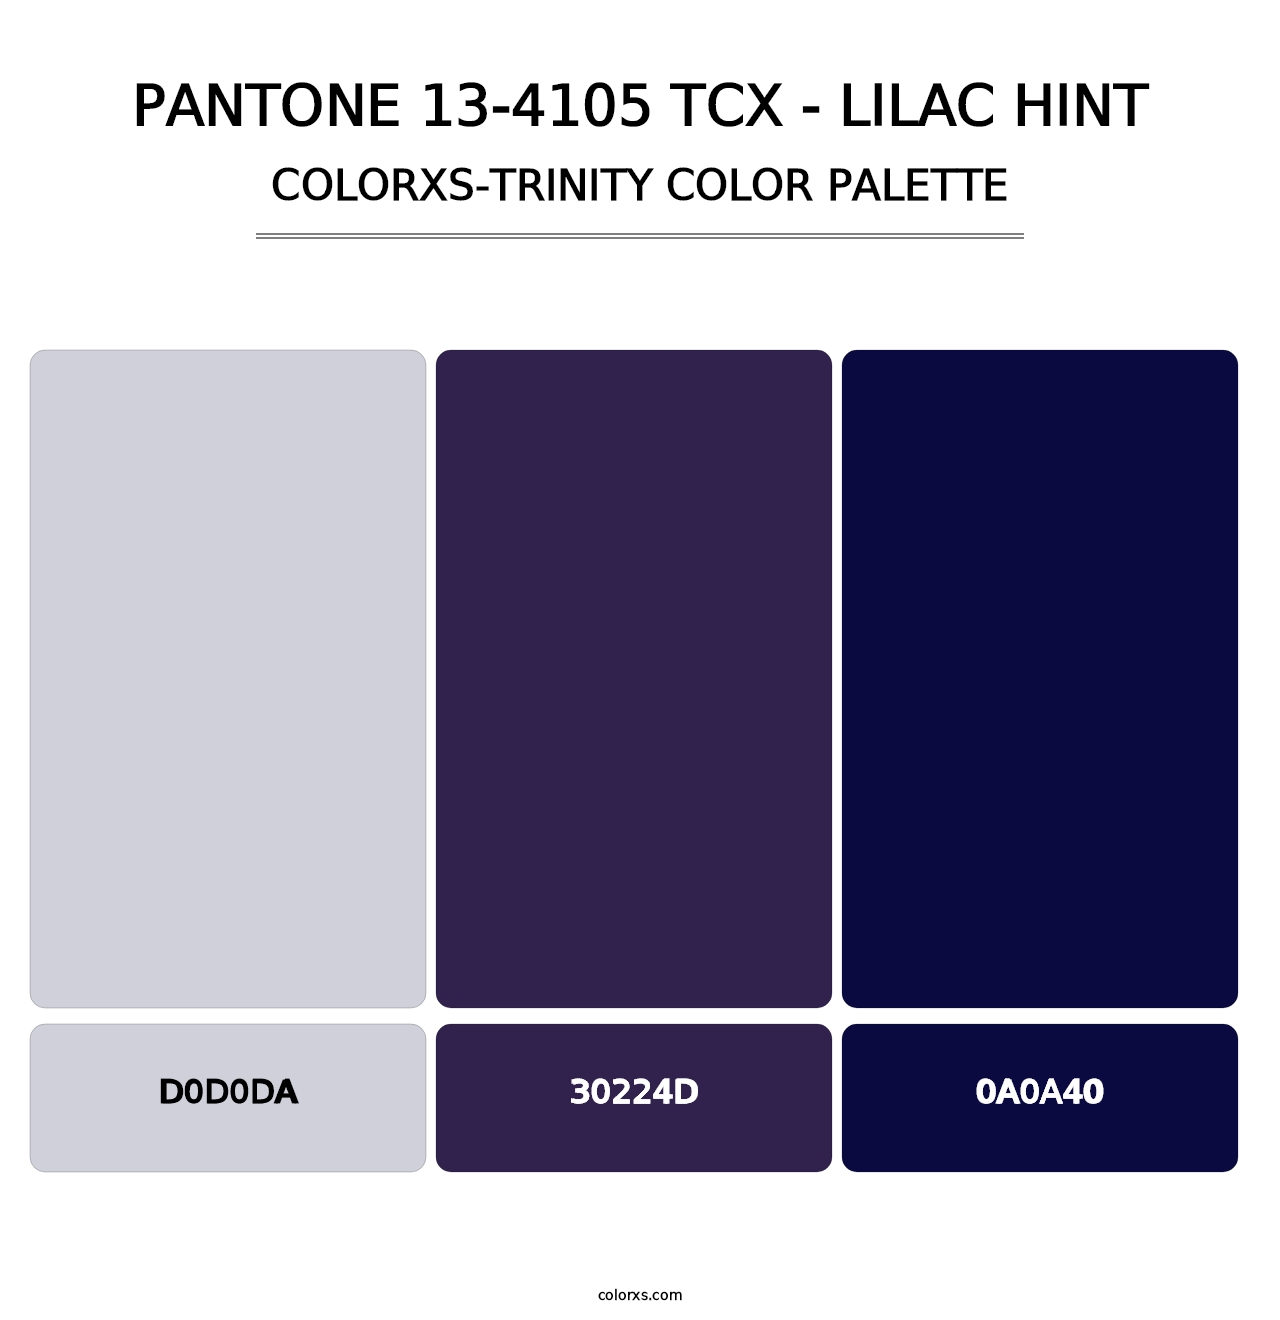 PANTONE 13-4105 TCX - Lilac Hint - Colorxs Trinity Palette